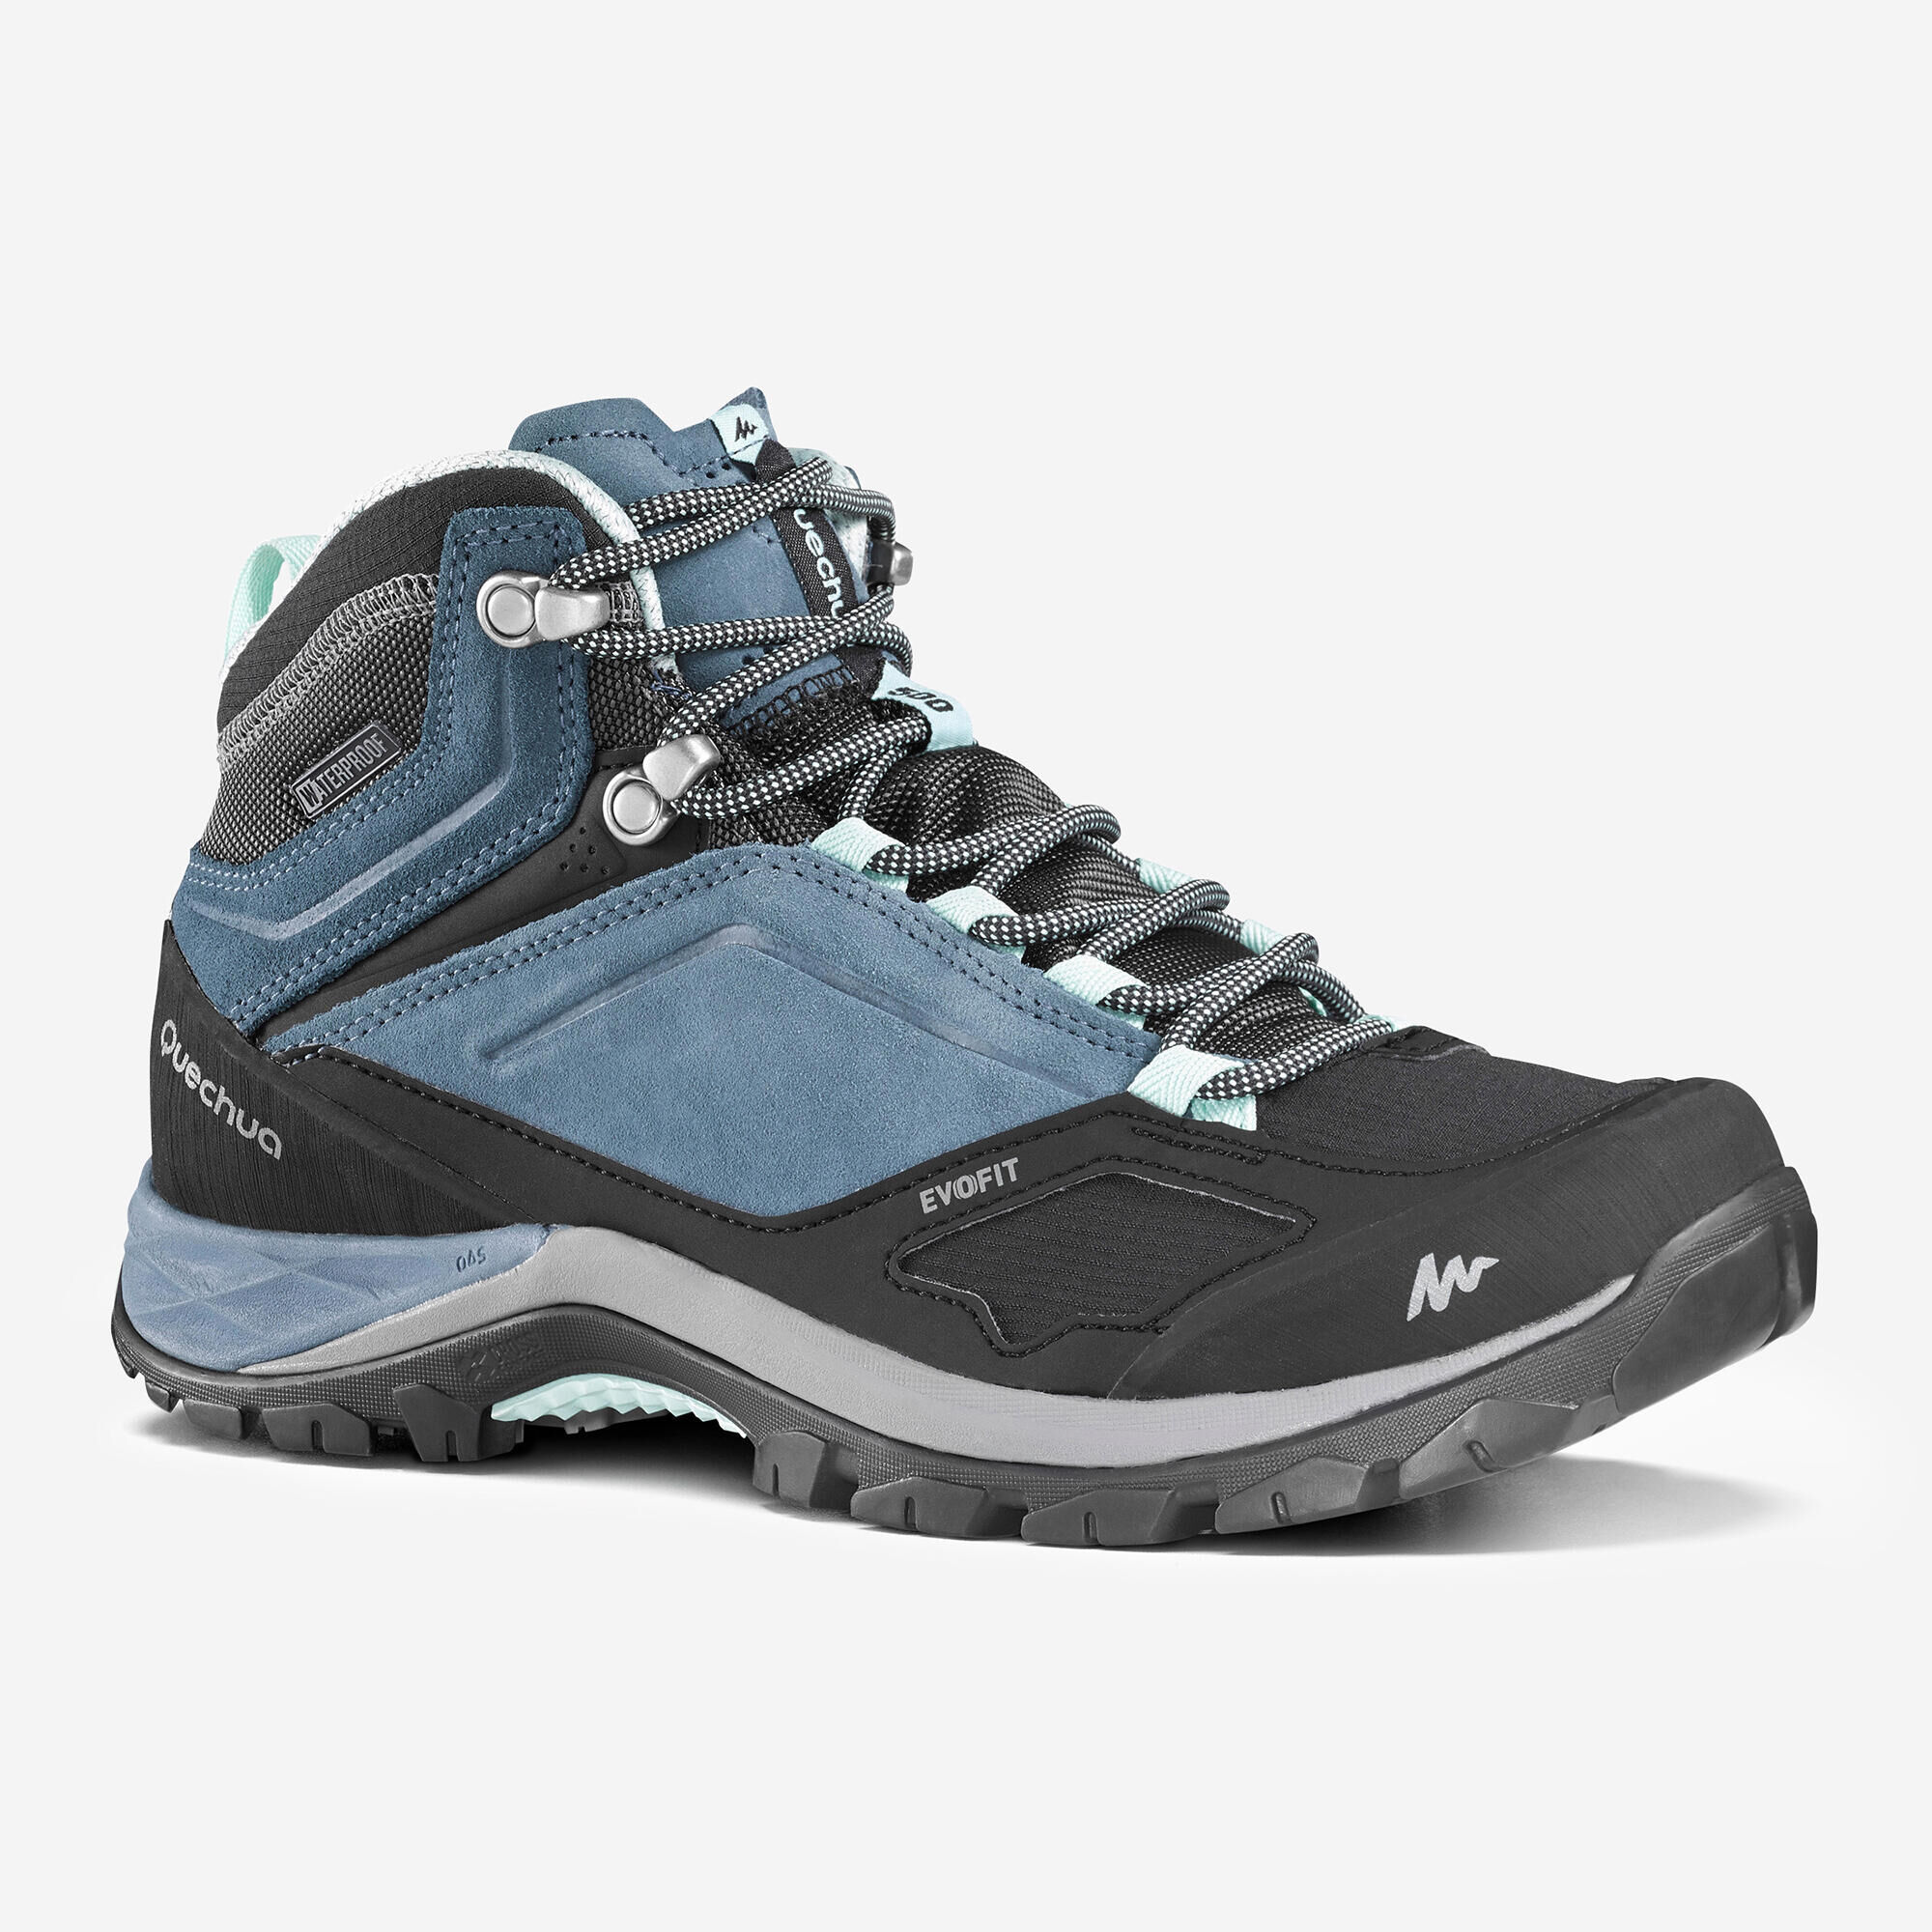 QUECHUA Women’s waterproof mountain walking boots - MH500 Mid - Blue